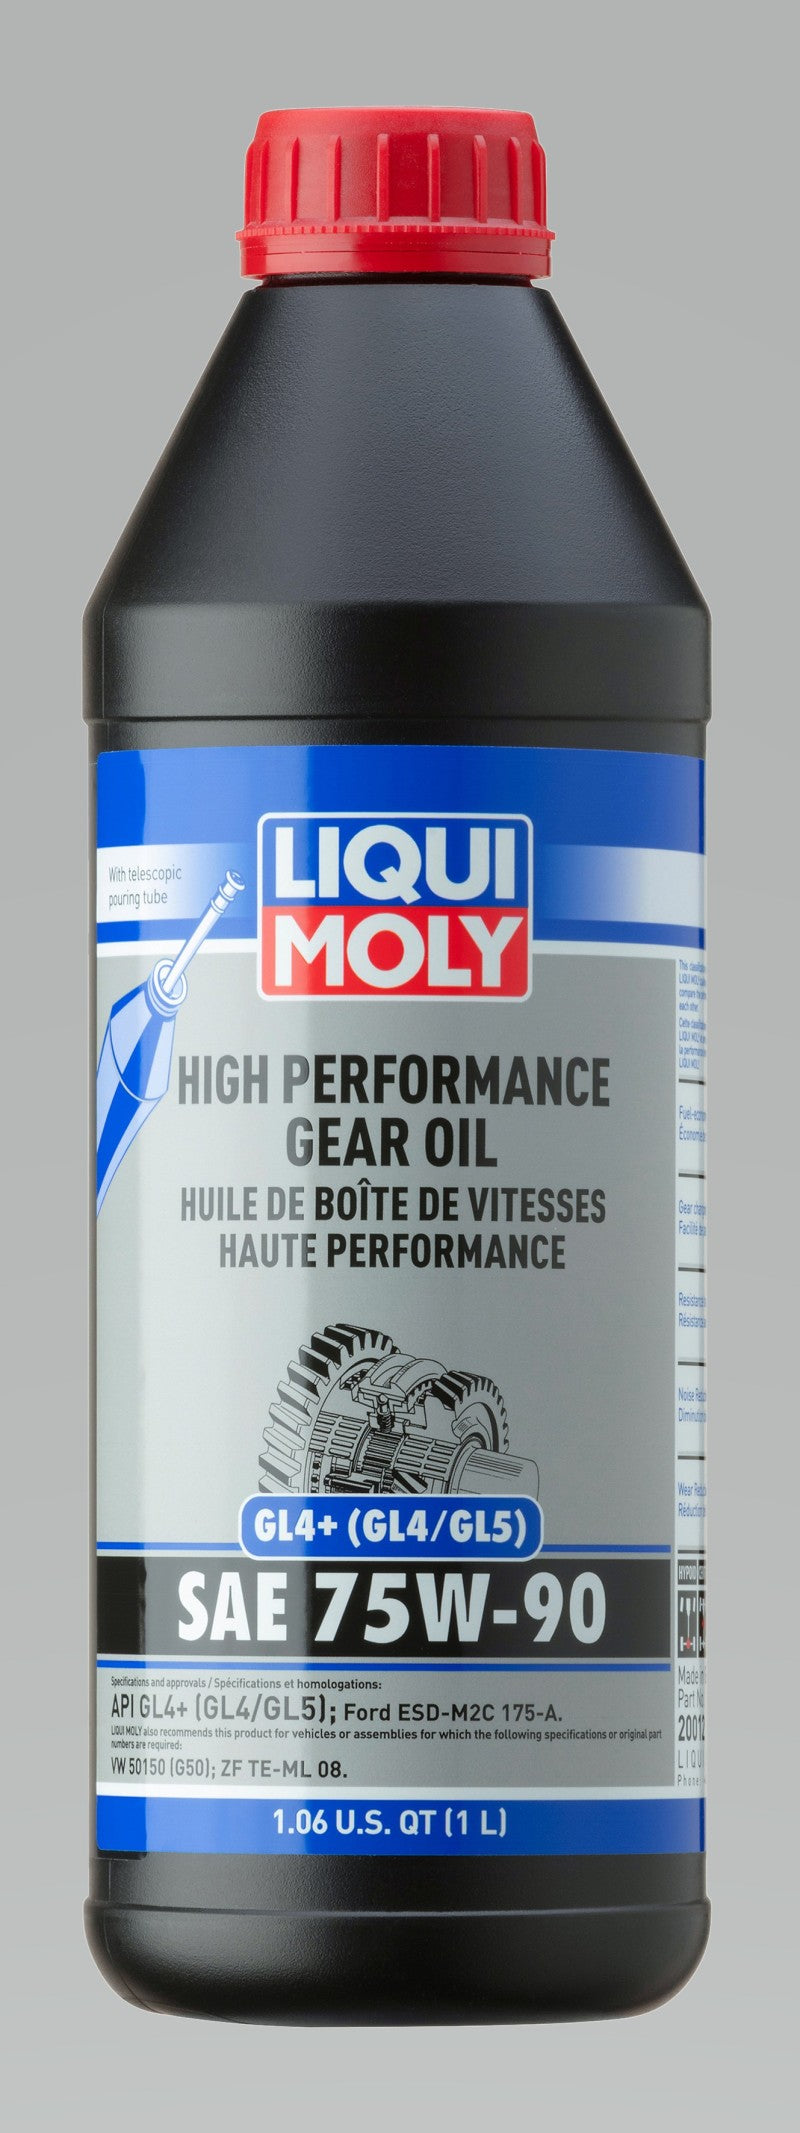 LIQUI MOLY 1L High Performance Gear Oil (GL4+) SAE 75W-90